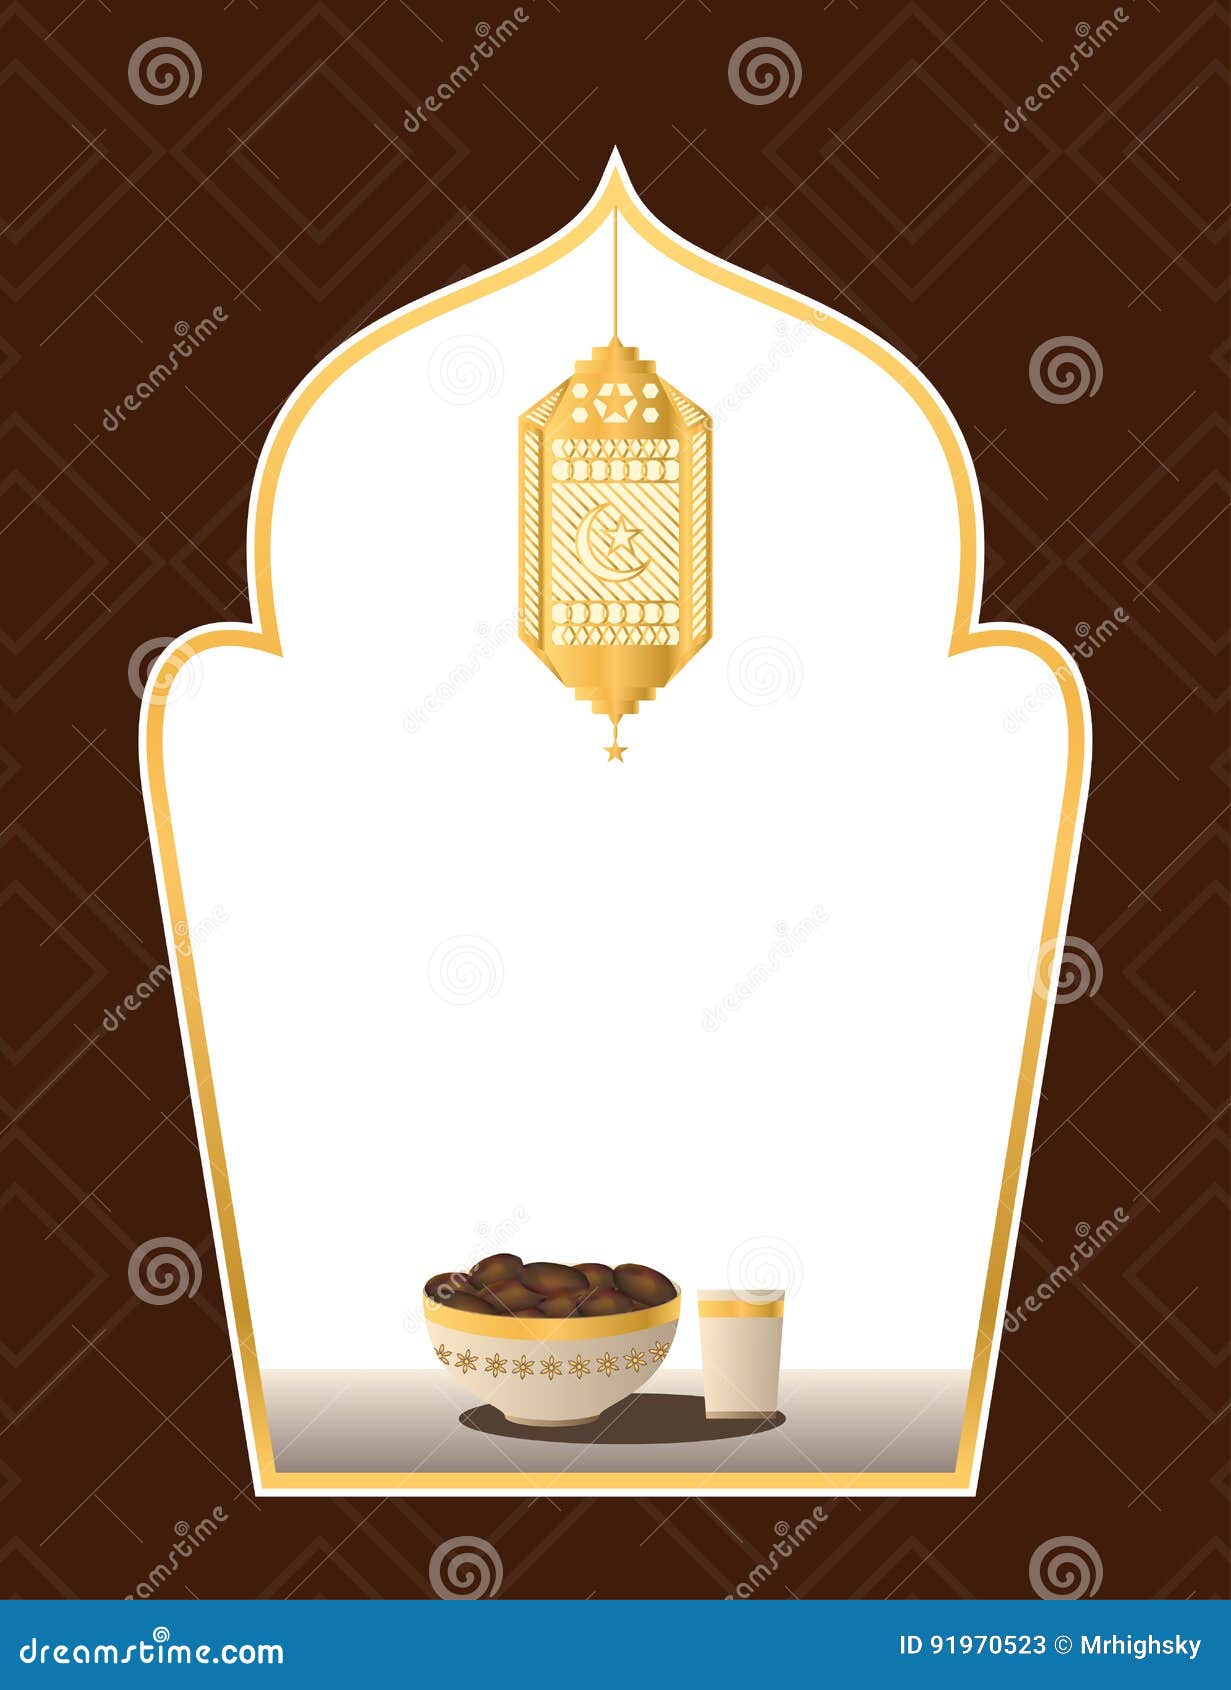 Ramadan Iftar Concept Flyer Template Stock Vector - Illustration of  invitation, brown: 91970523